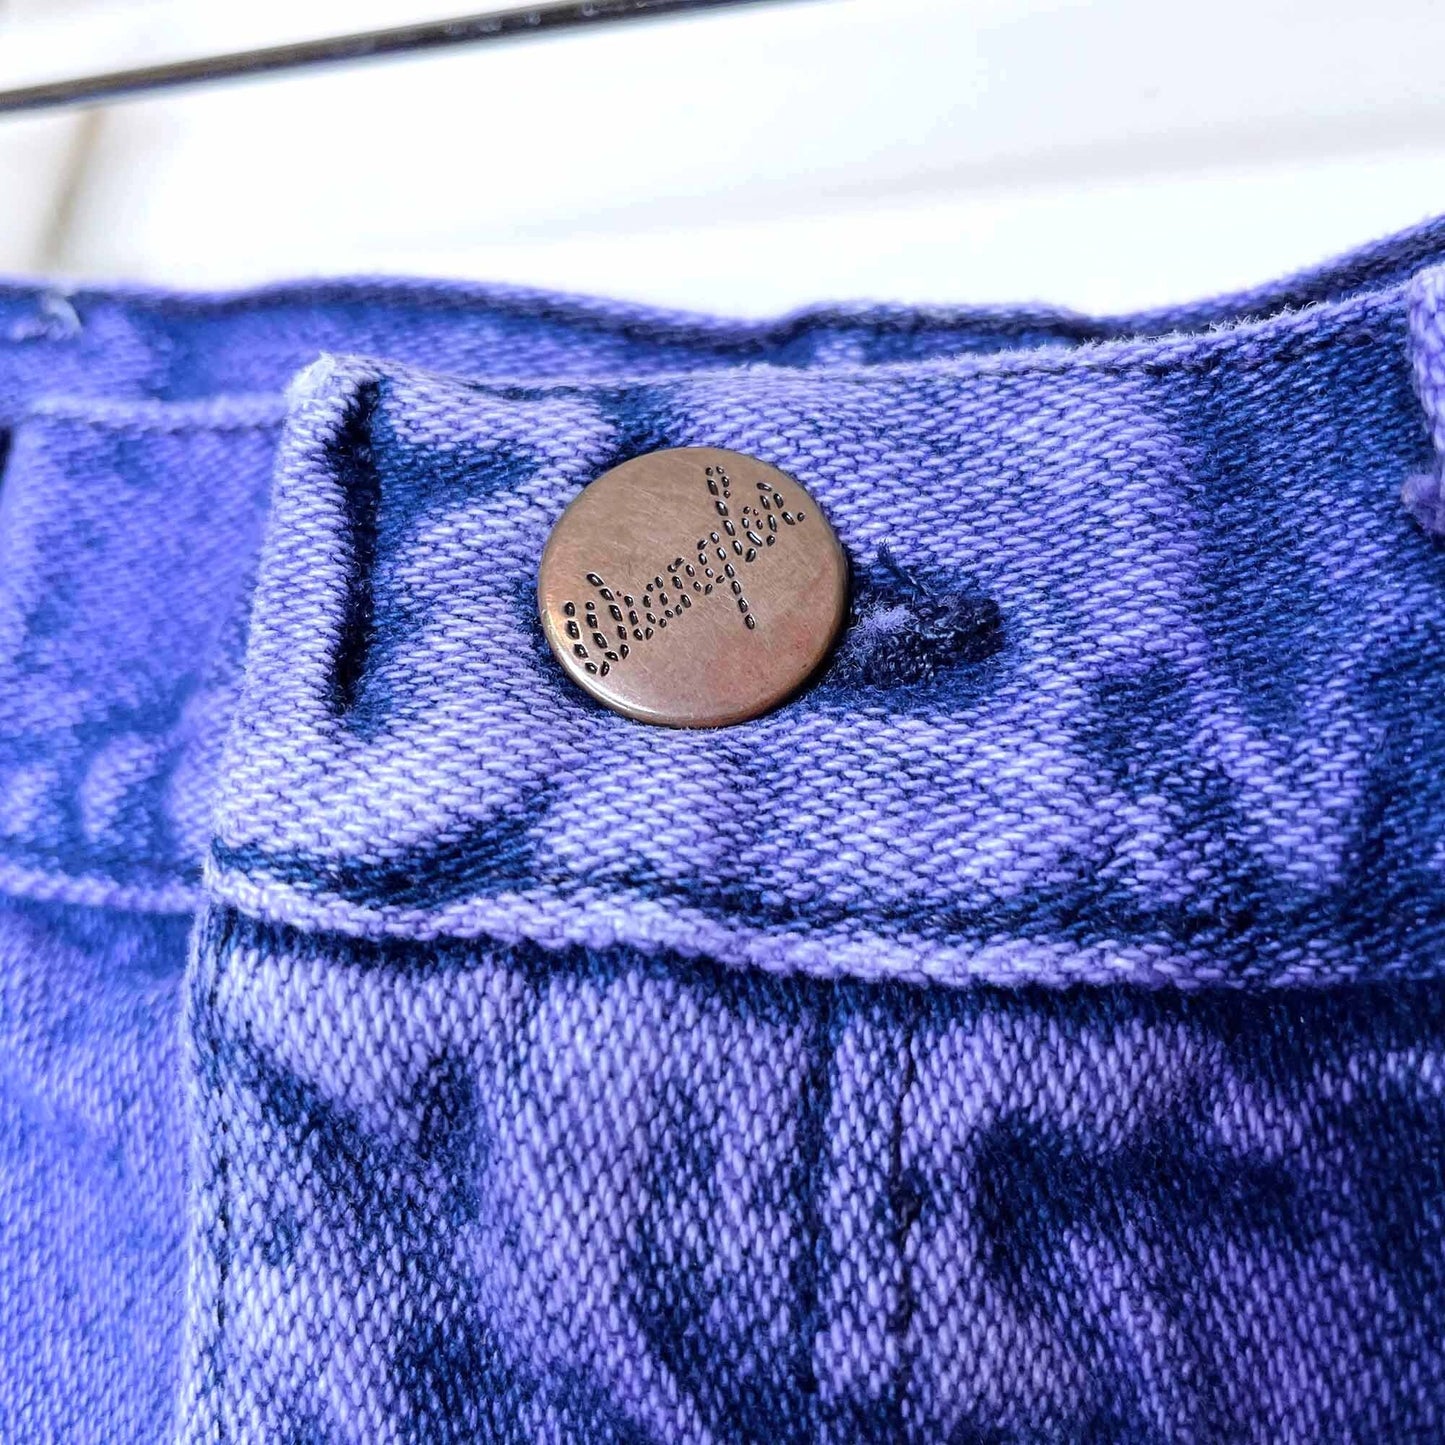 Wrangler high rise purple cut-off denim shorts - size 25